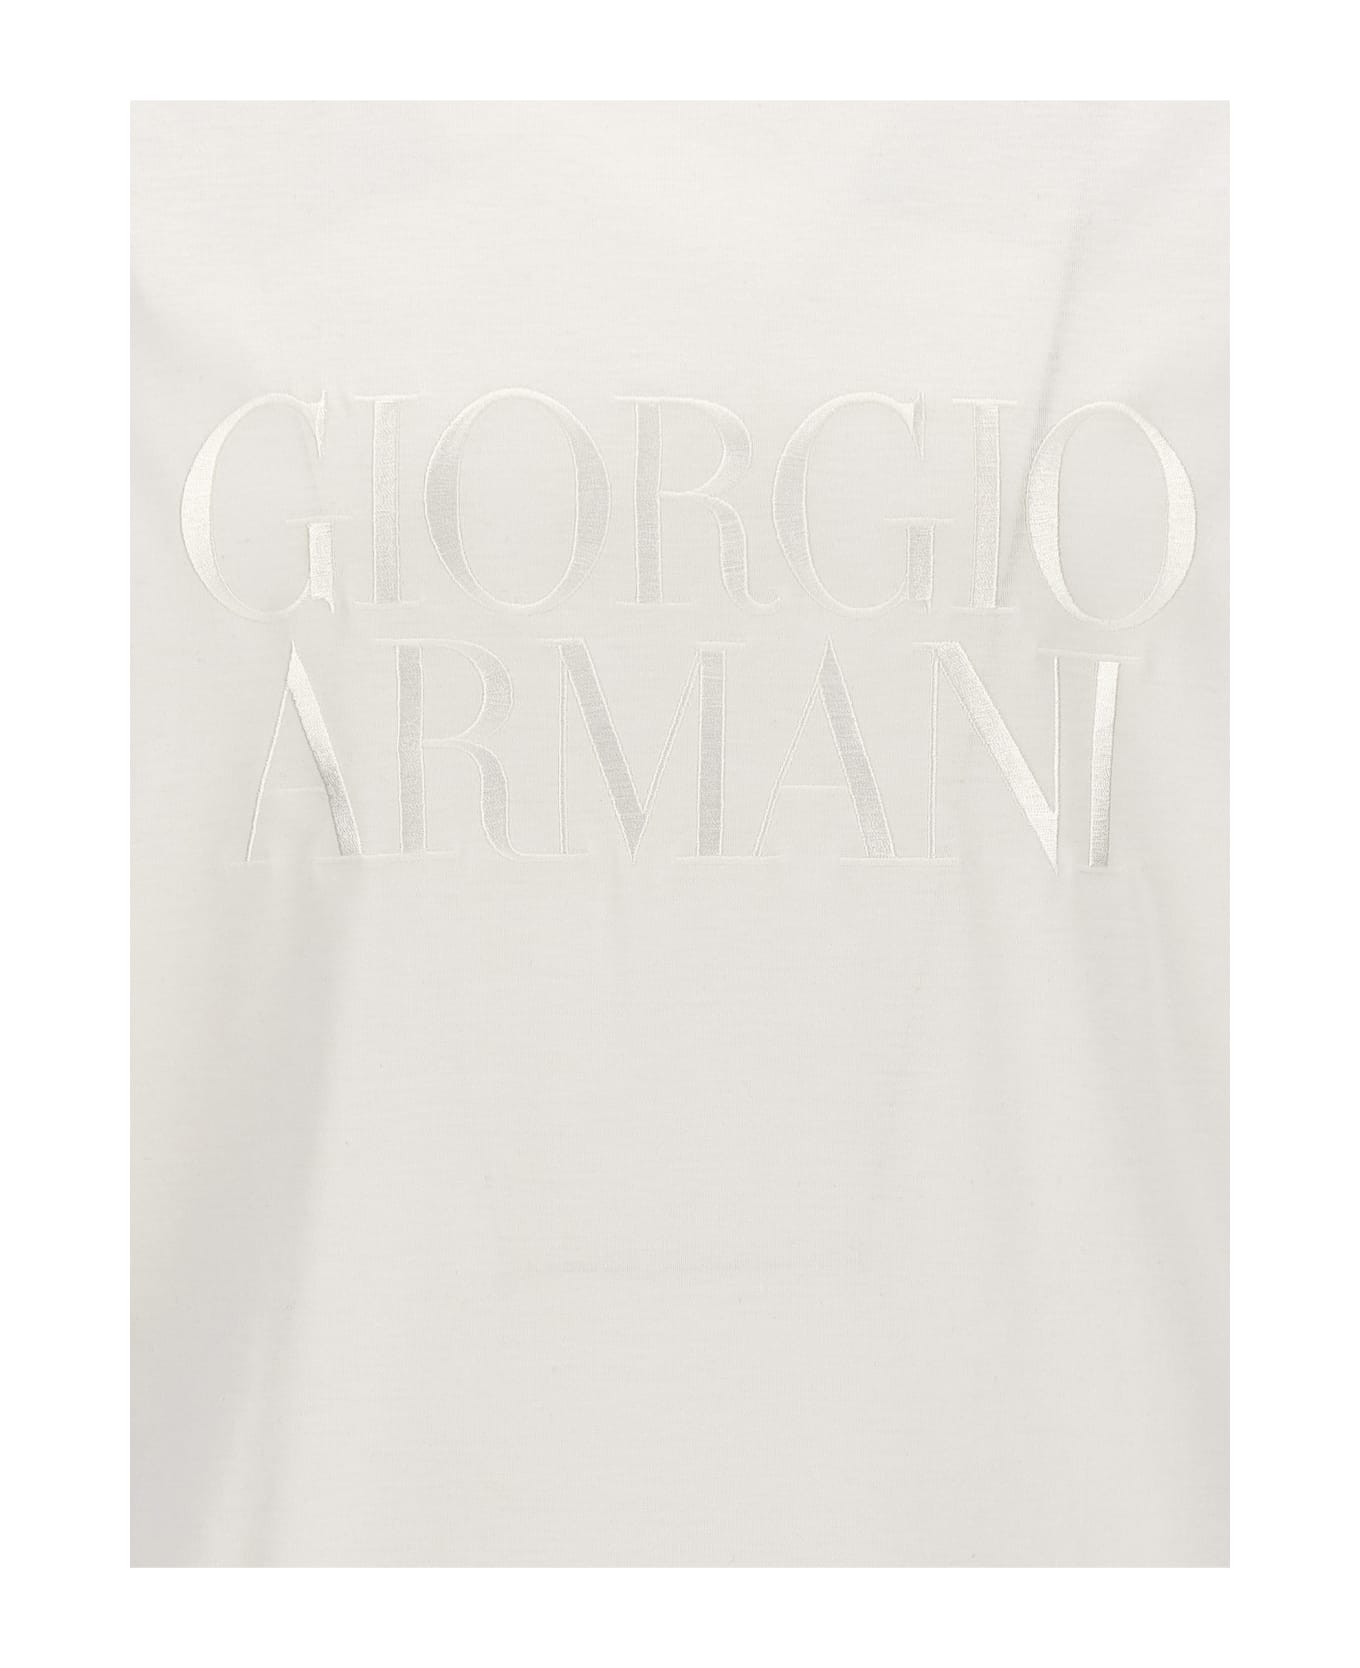 Giorgio Armani Logo T-shirt - White